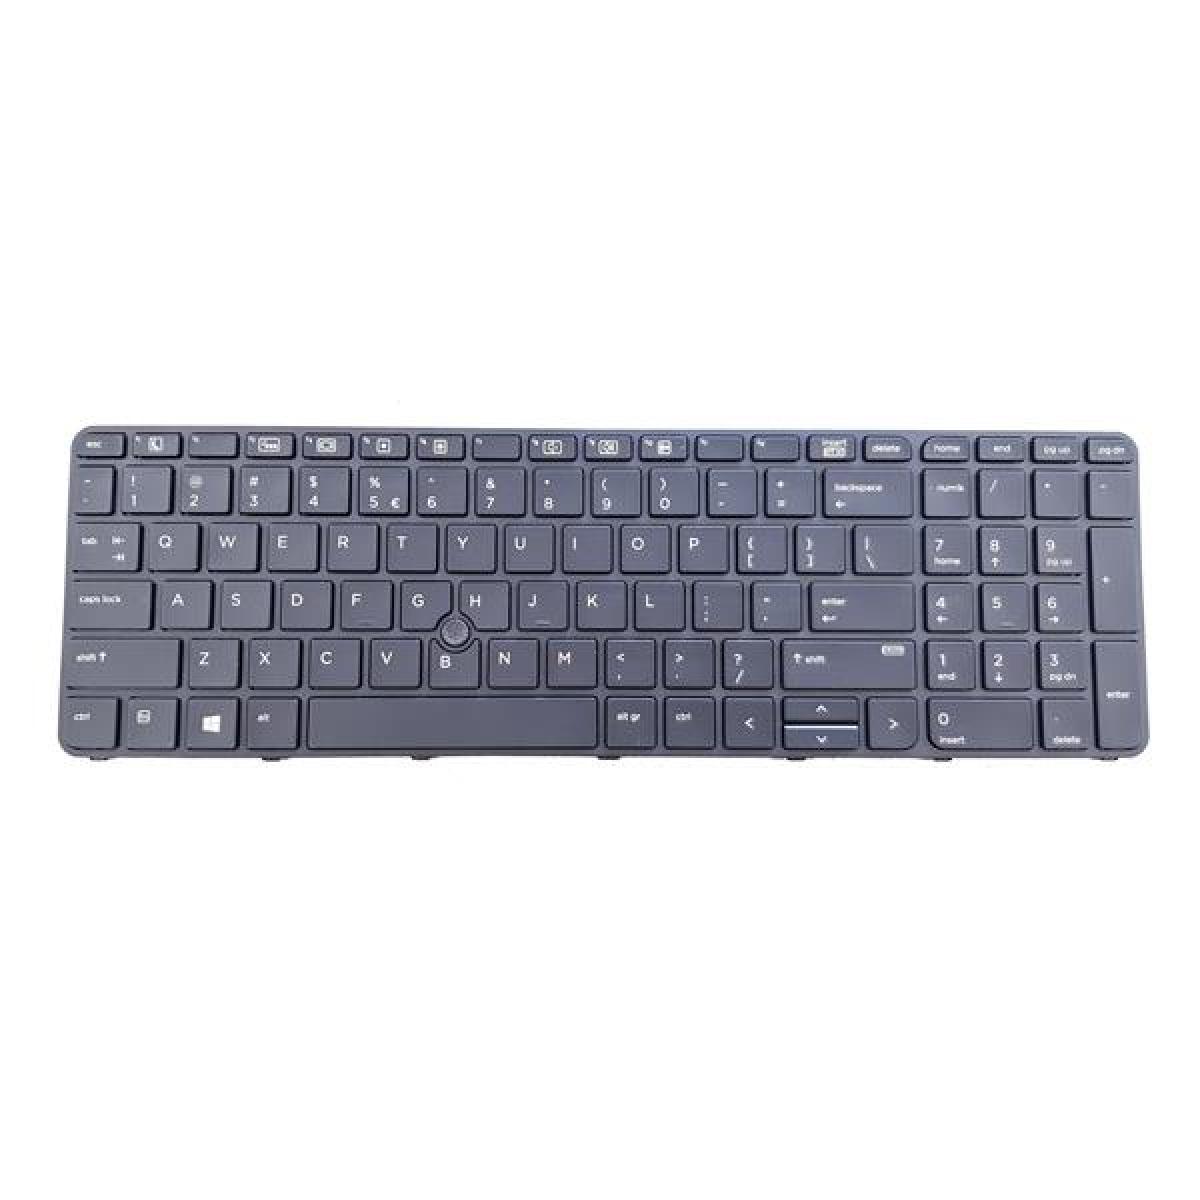 HP Notebook Keyboard 650 G2 Intenational Backlight/Pointingstick